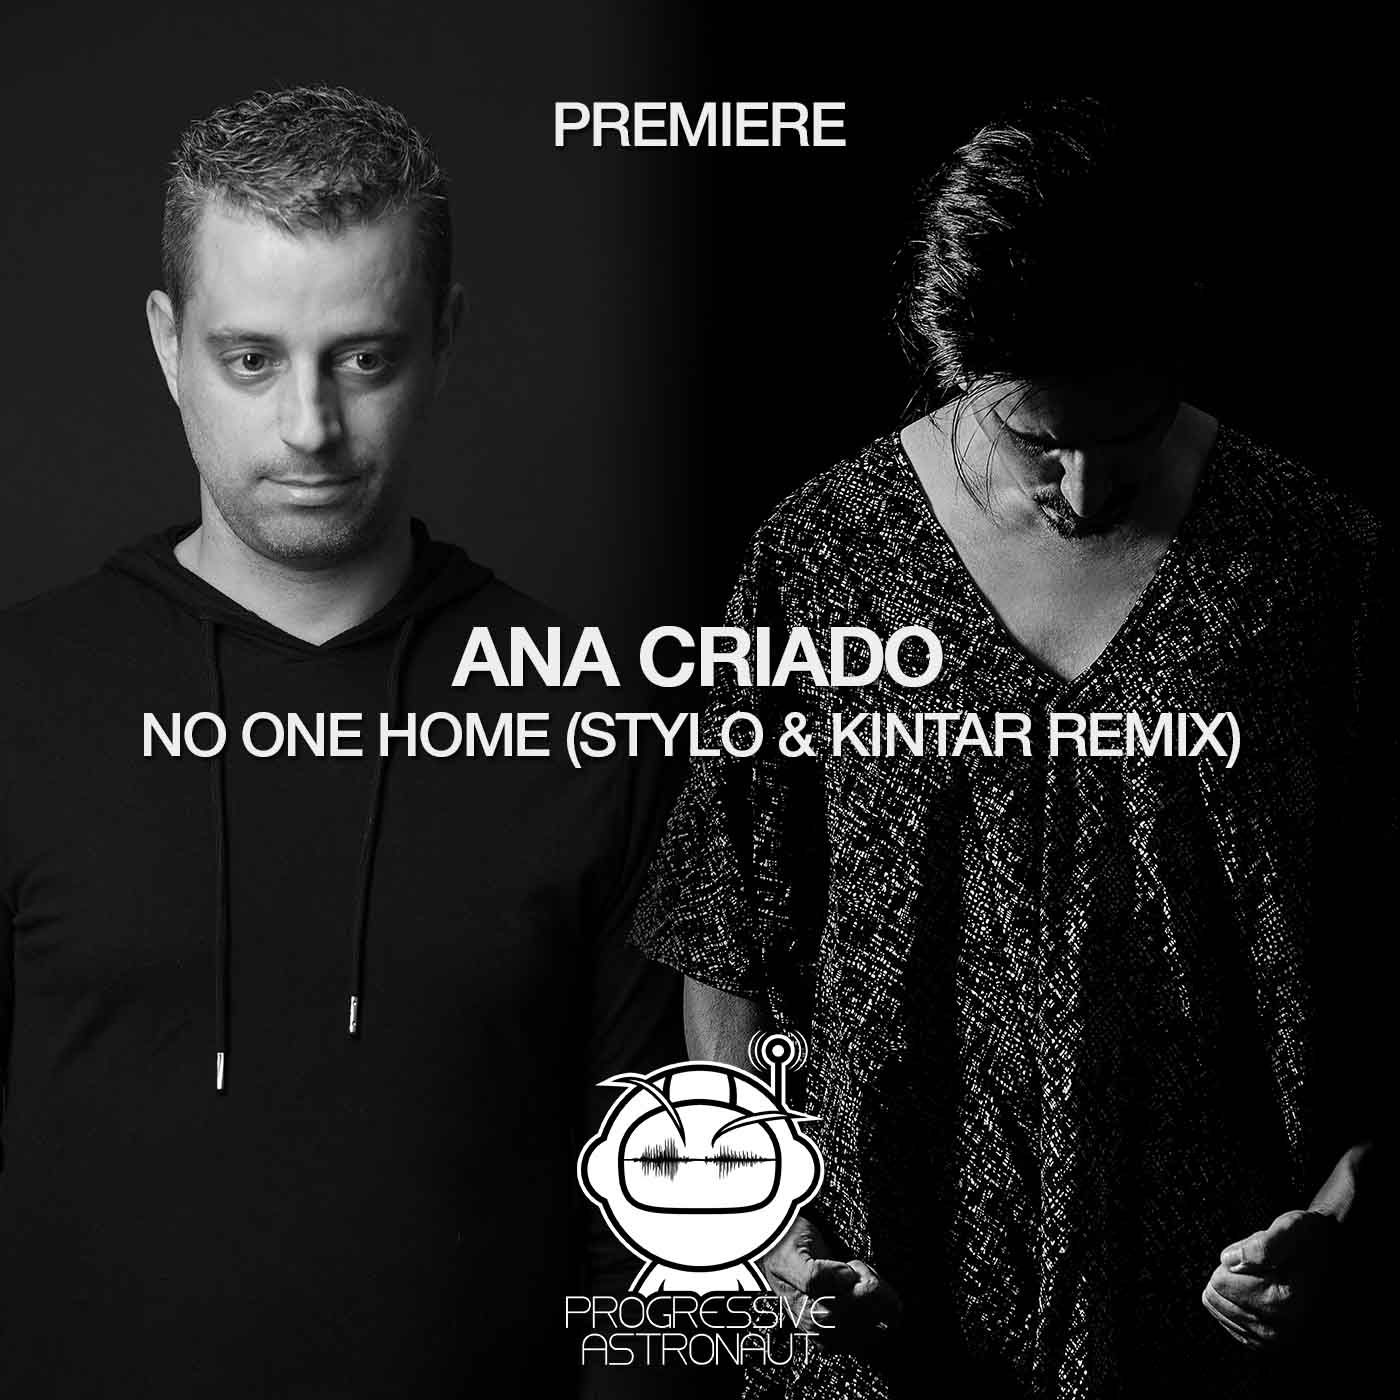 PREMIERE: Ana Criado - No One Home (Stylo & Kintar Remix) [Timeless Moment]